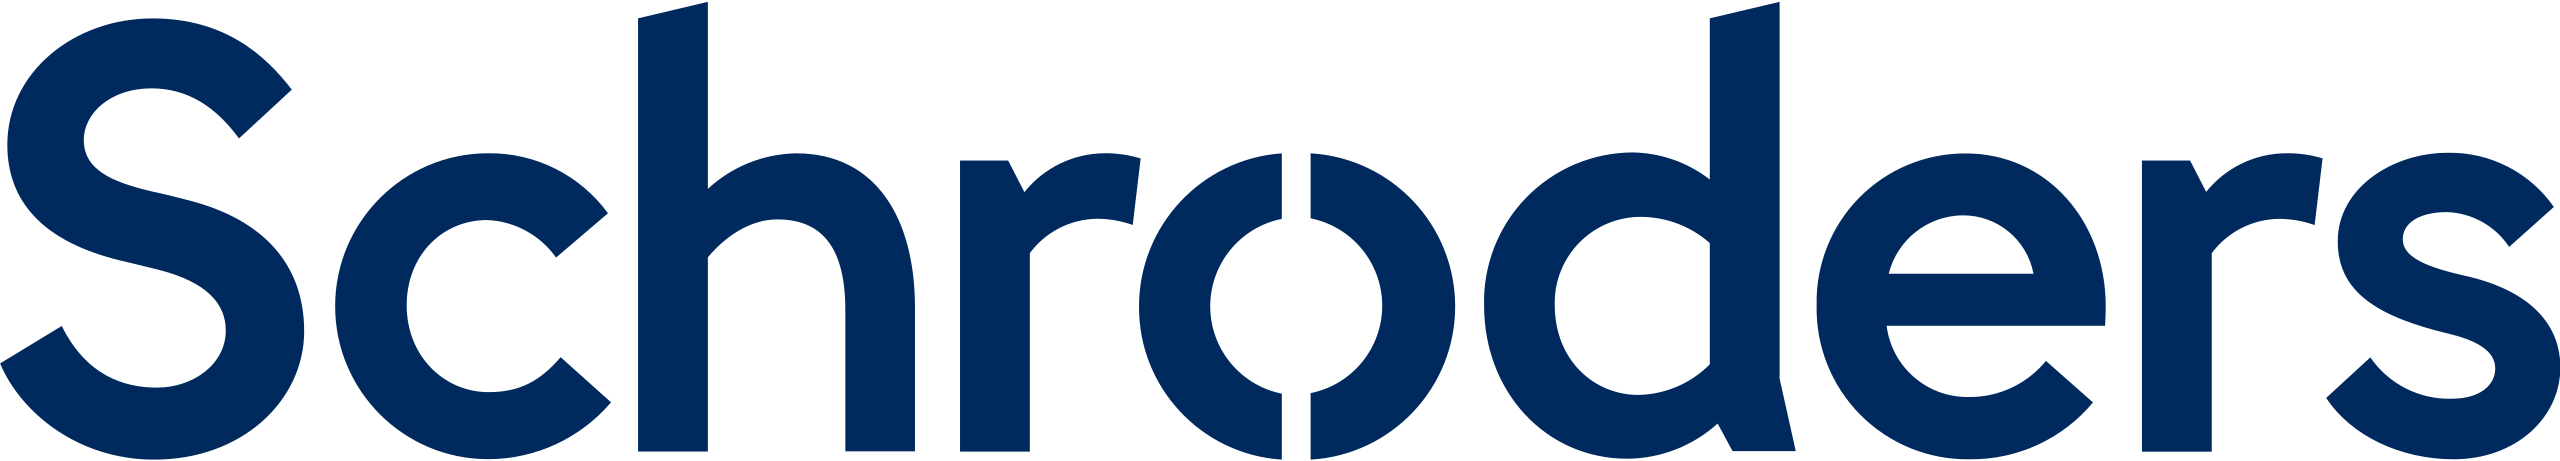 Schroders_plc_logo.svg